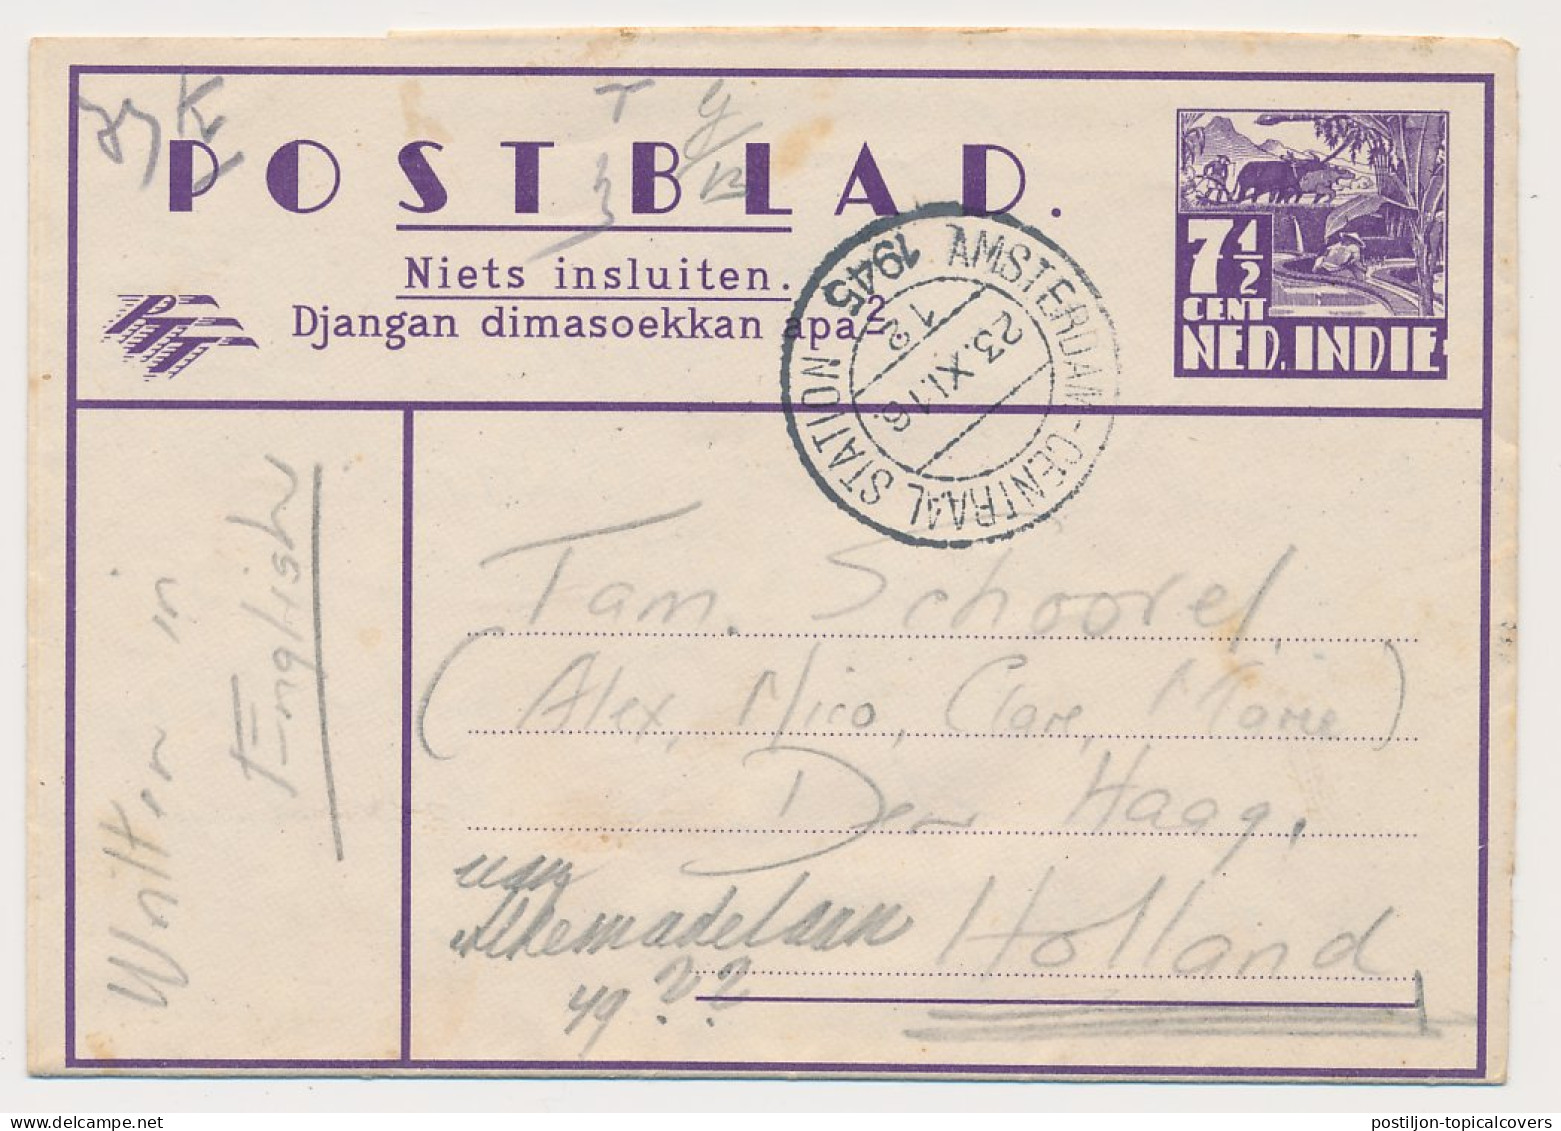 Postblad Camp Lampersari Semarang Neth. Indies - Den Haag 1945 - Nederlands-Indië